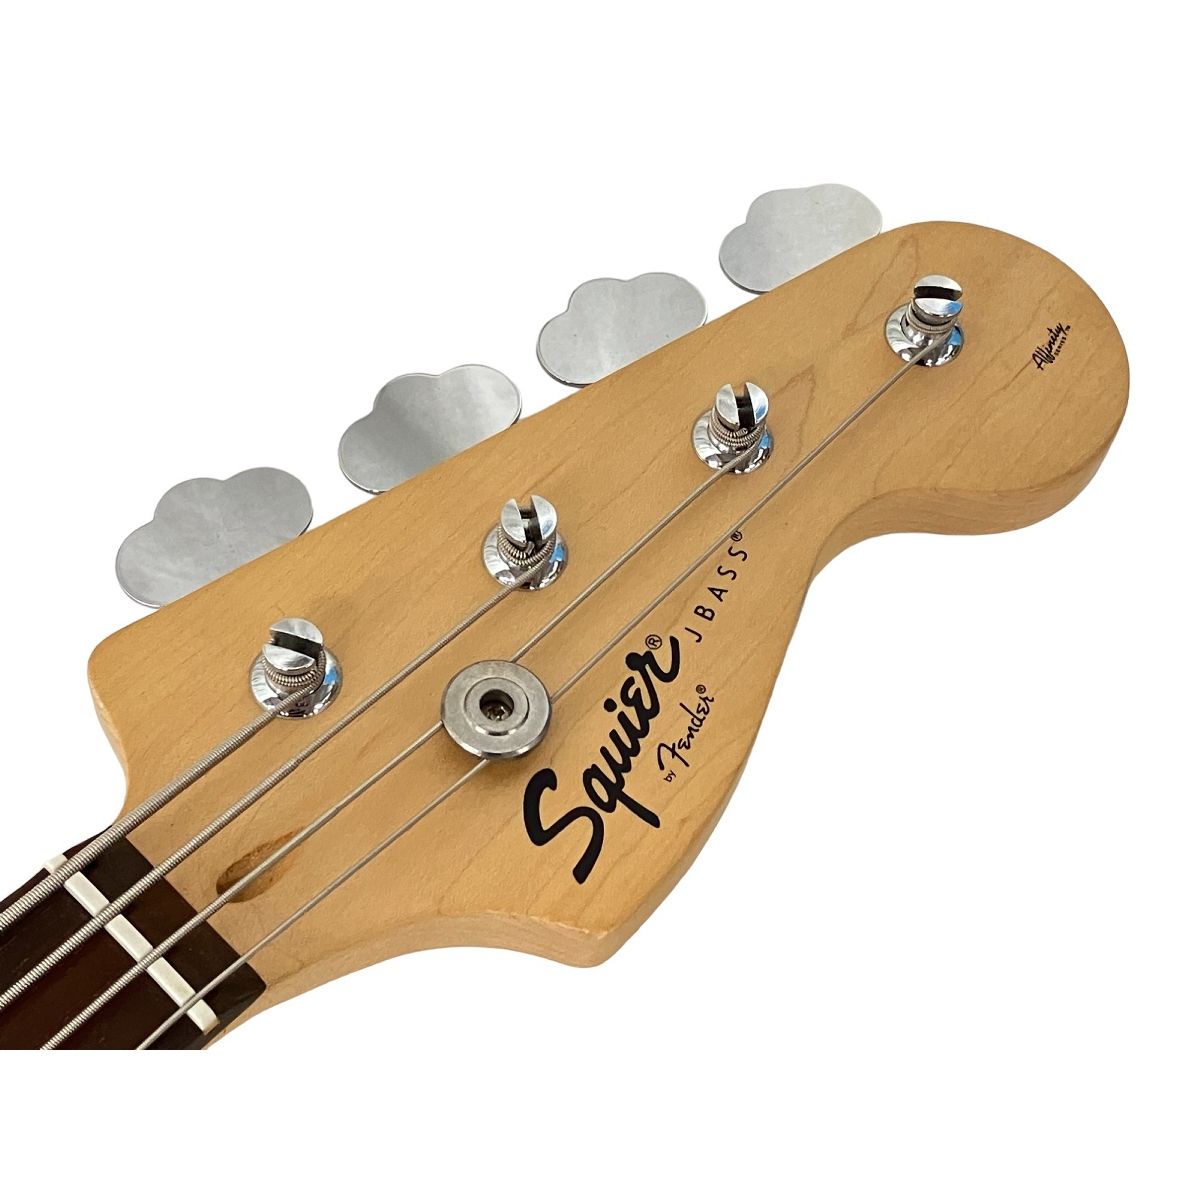 Squier by Fender JAZZ AFFINITY エレキ ベース Series Jazz Bass エレキベース スクワイヤー フェンダー  中古 S9006446 - メルカリ